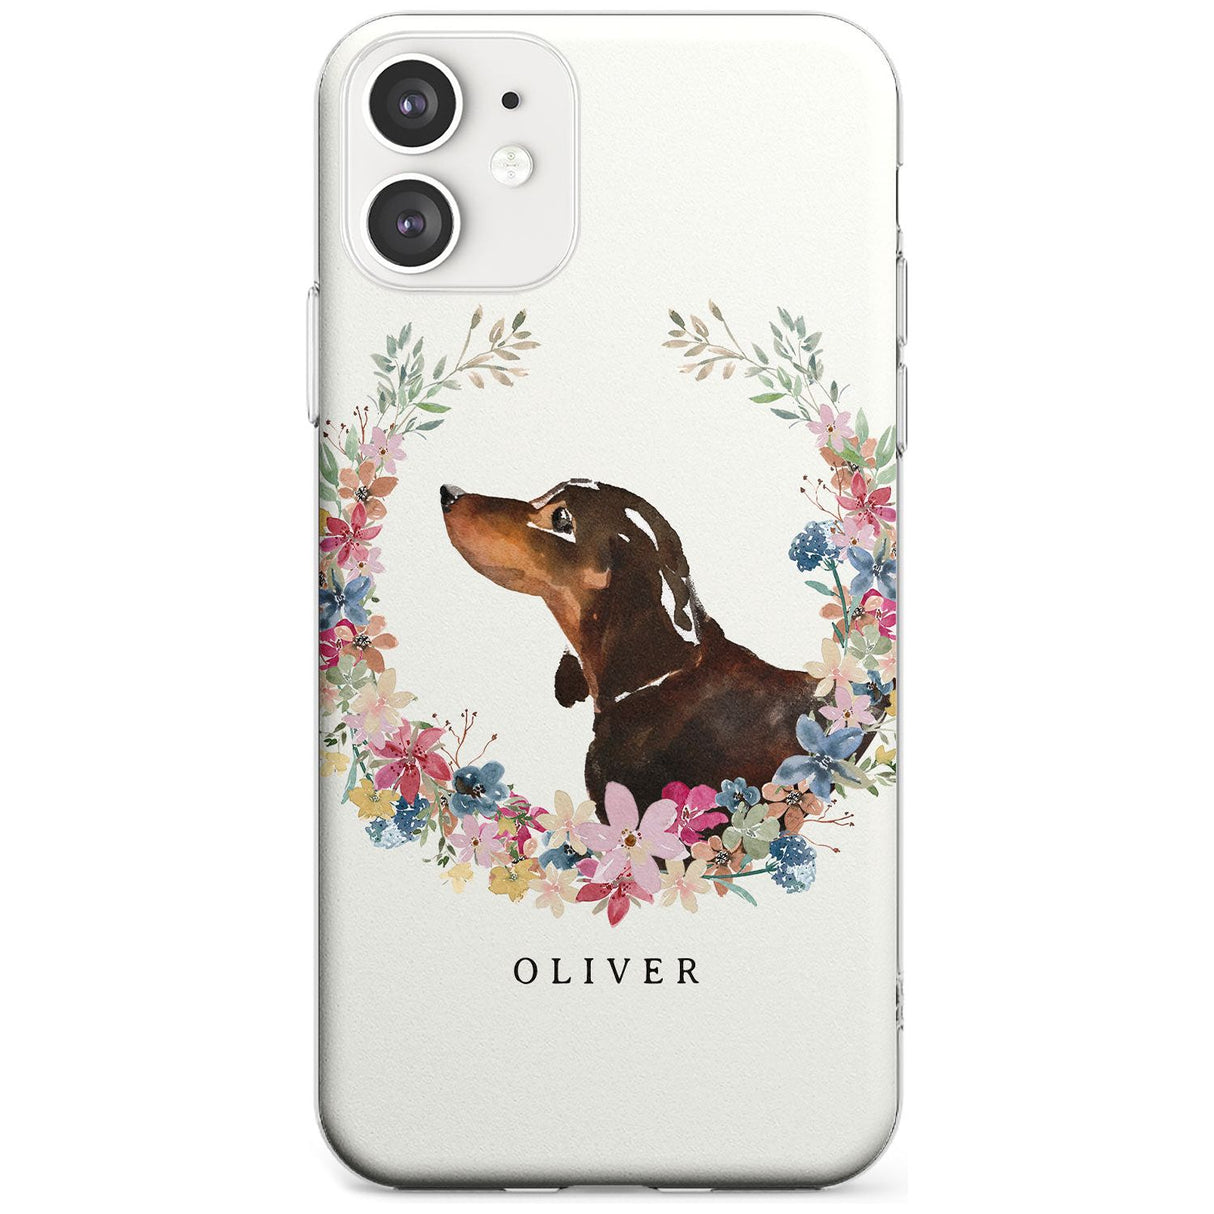 Black & Tan Dachshund - Watercolour Dog Portrait Slim TPU Phone Case for iPhone 11